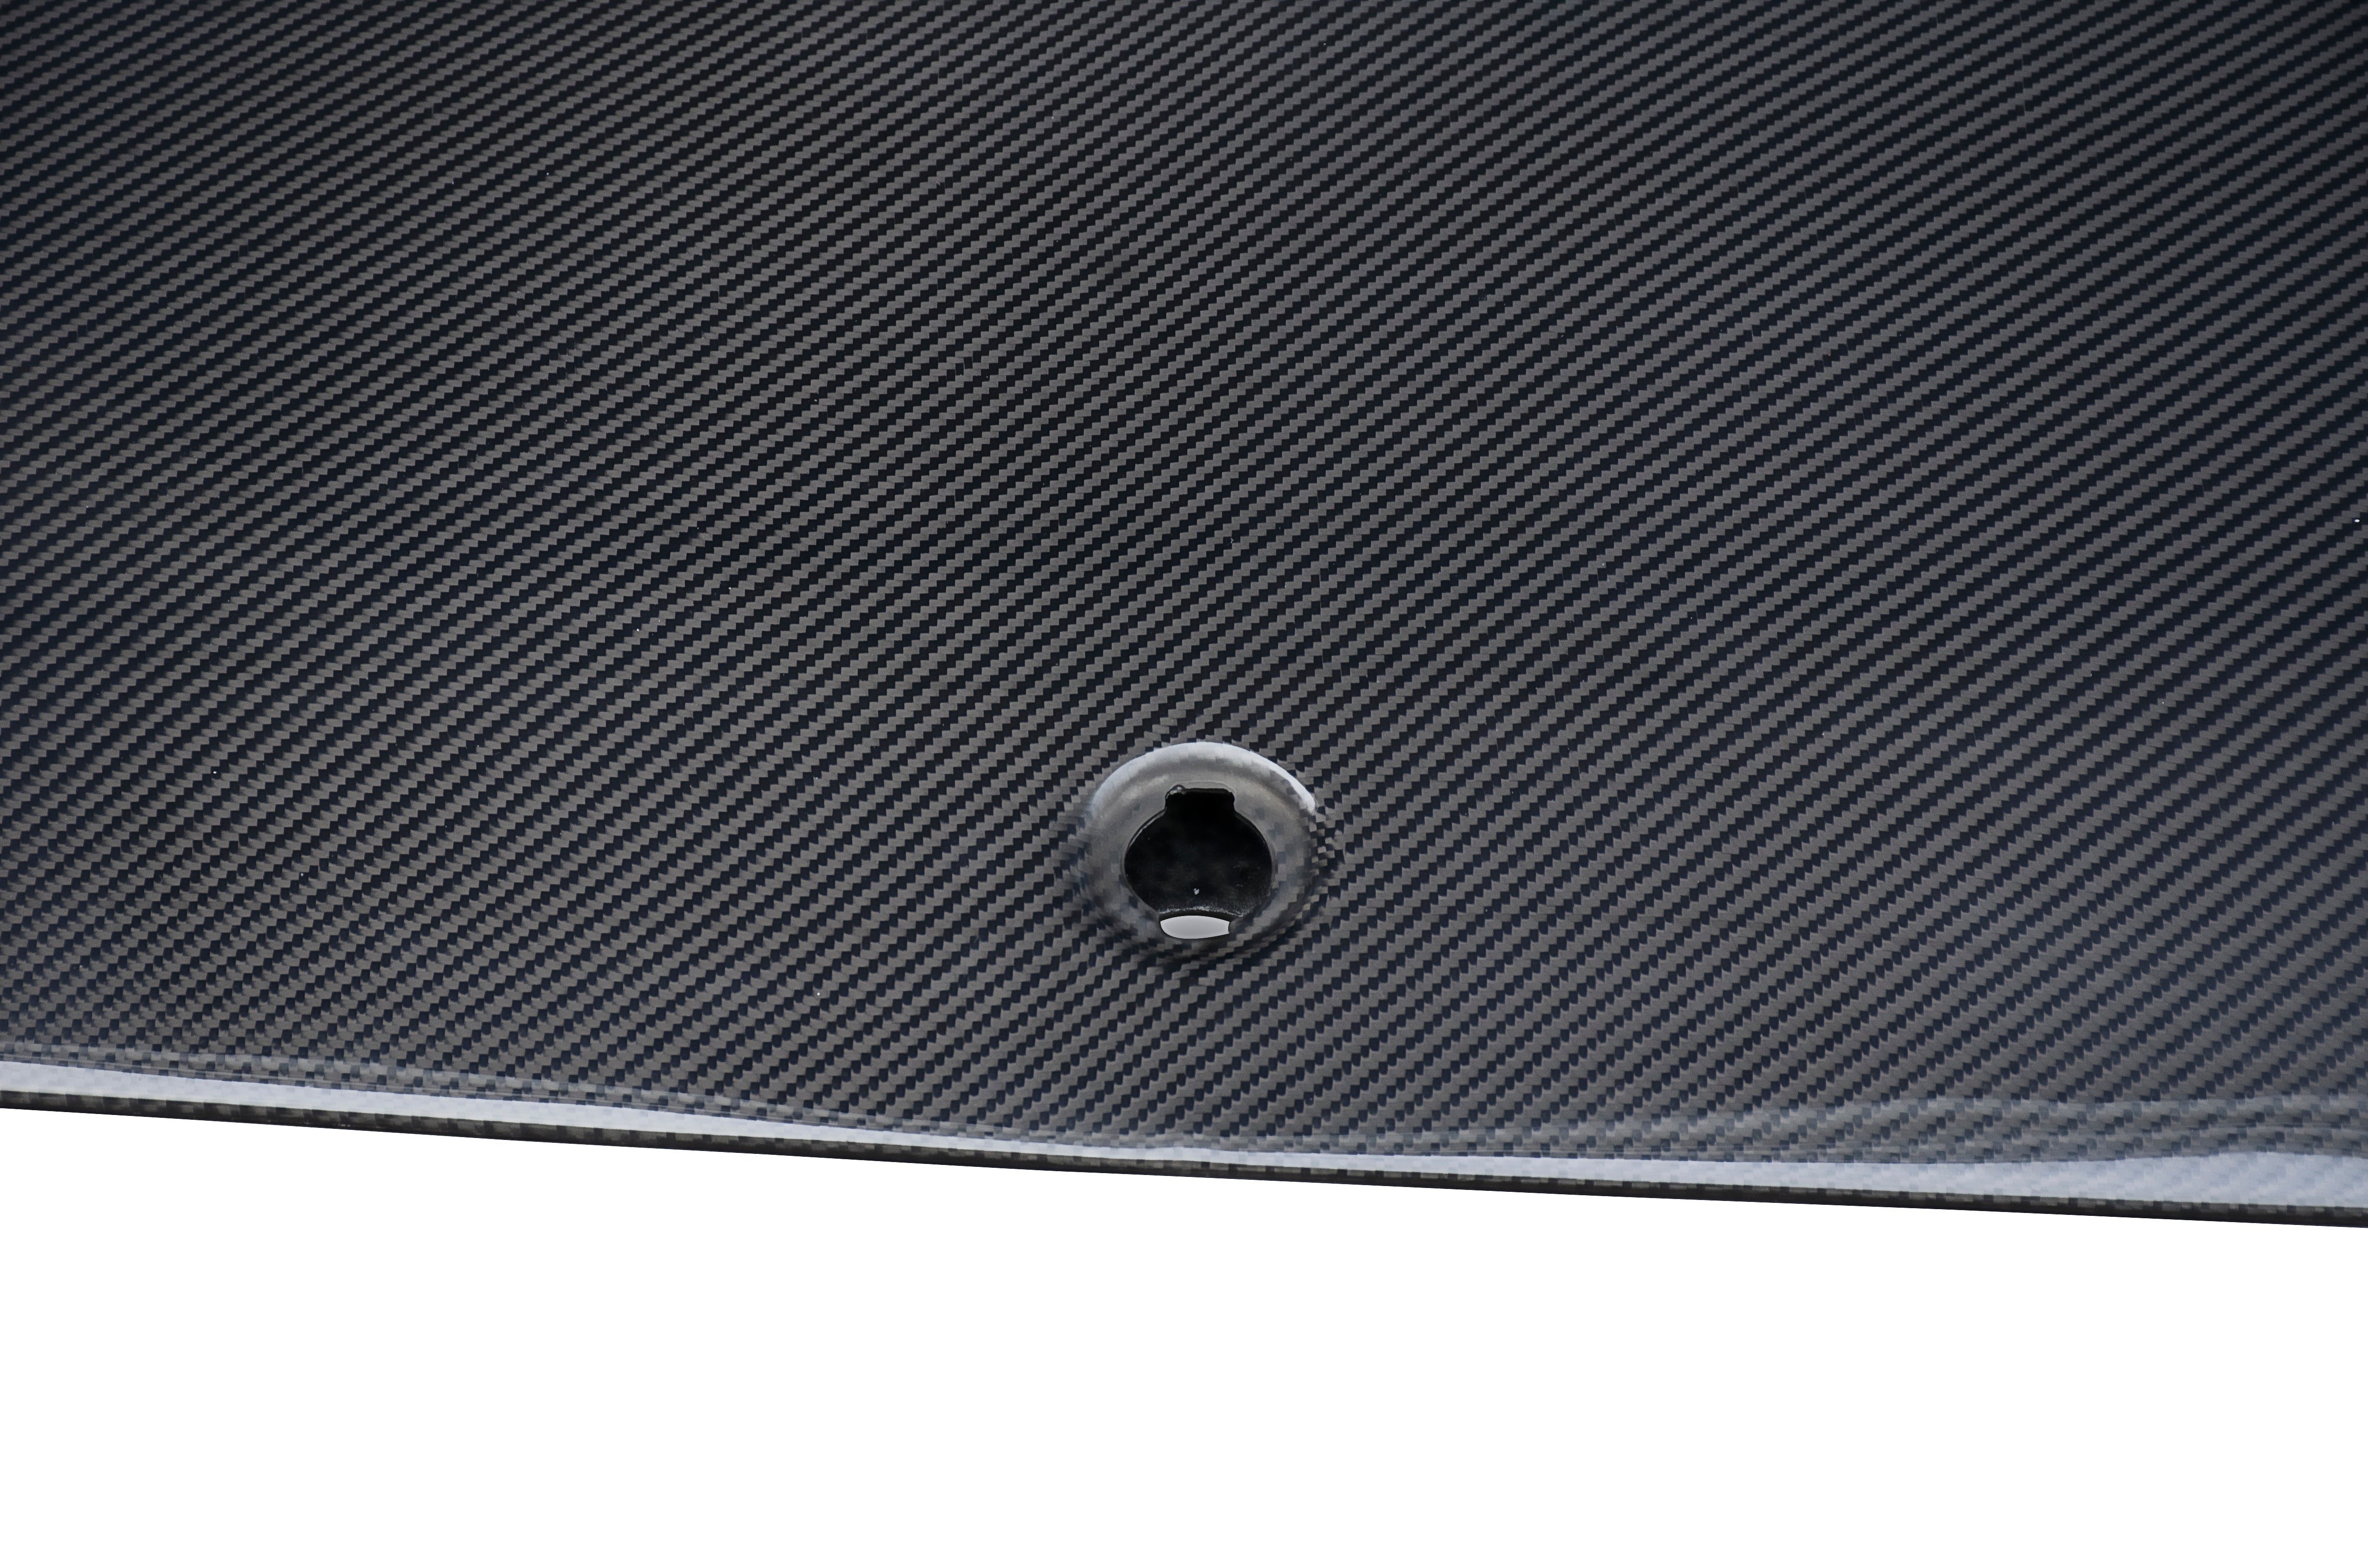 CMST Tuning Carbon Tempered Glass Transparent Hood For Mercedes Benz 2015-2020 AMG C63 Sedan Coupe 2 Door 4 Door